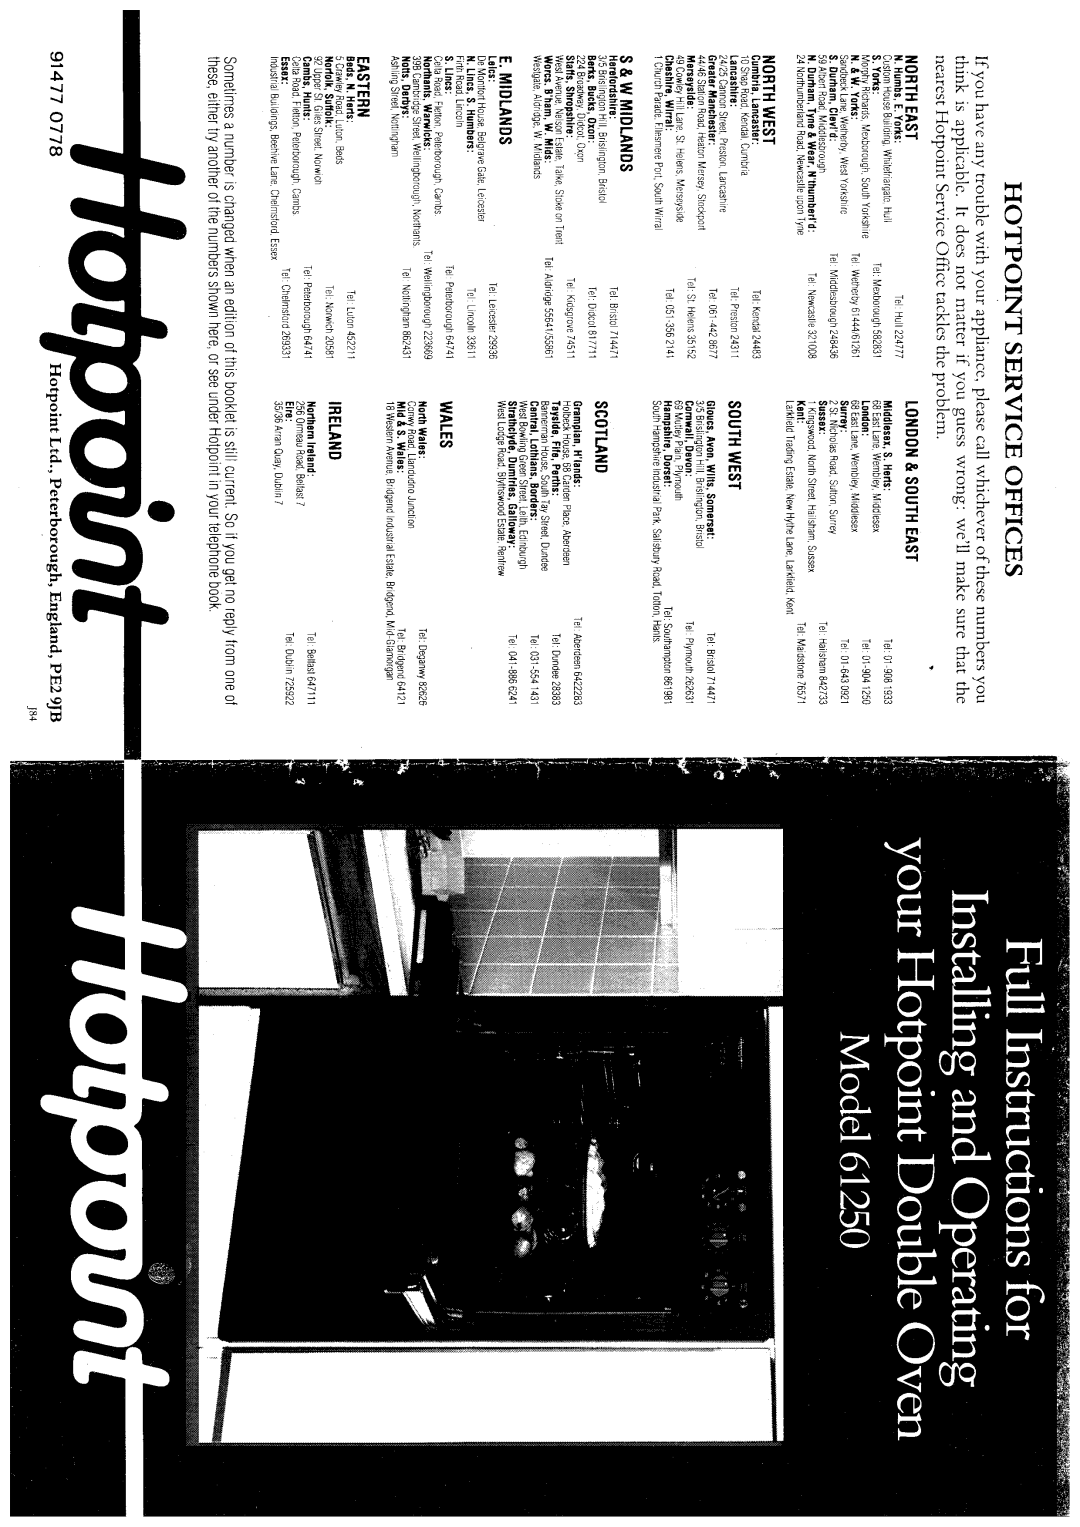 Hotpoint 61250 manual 